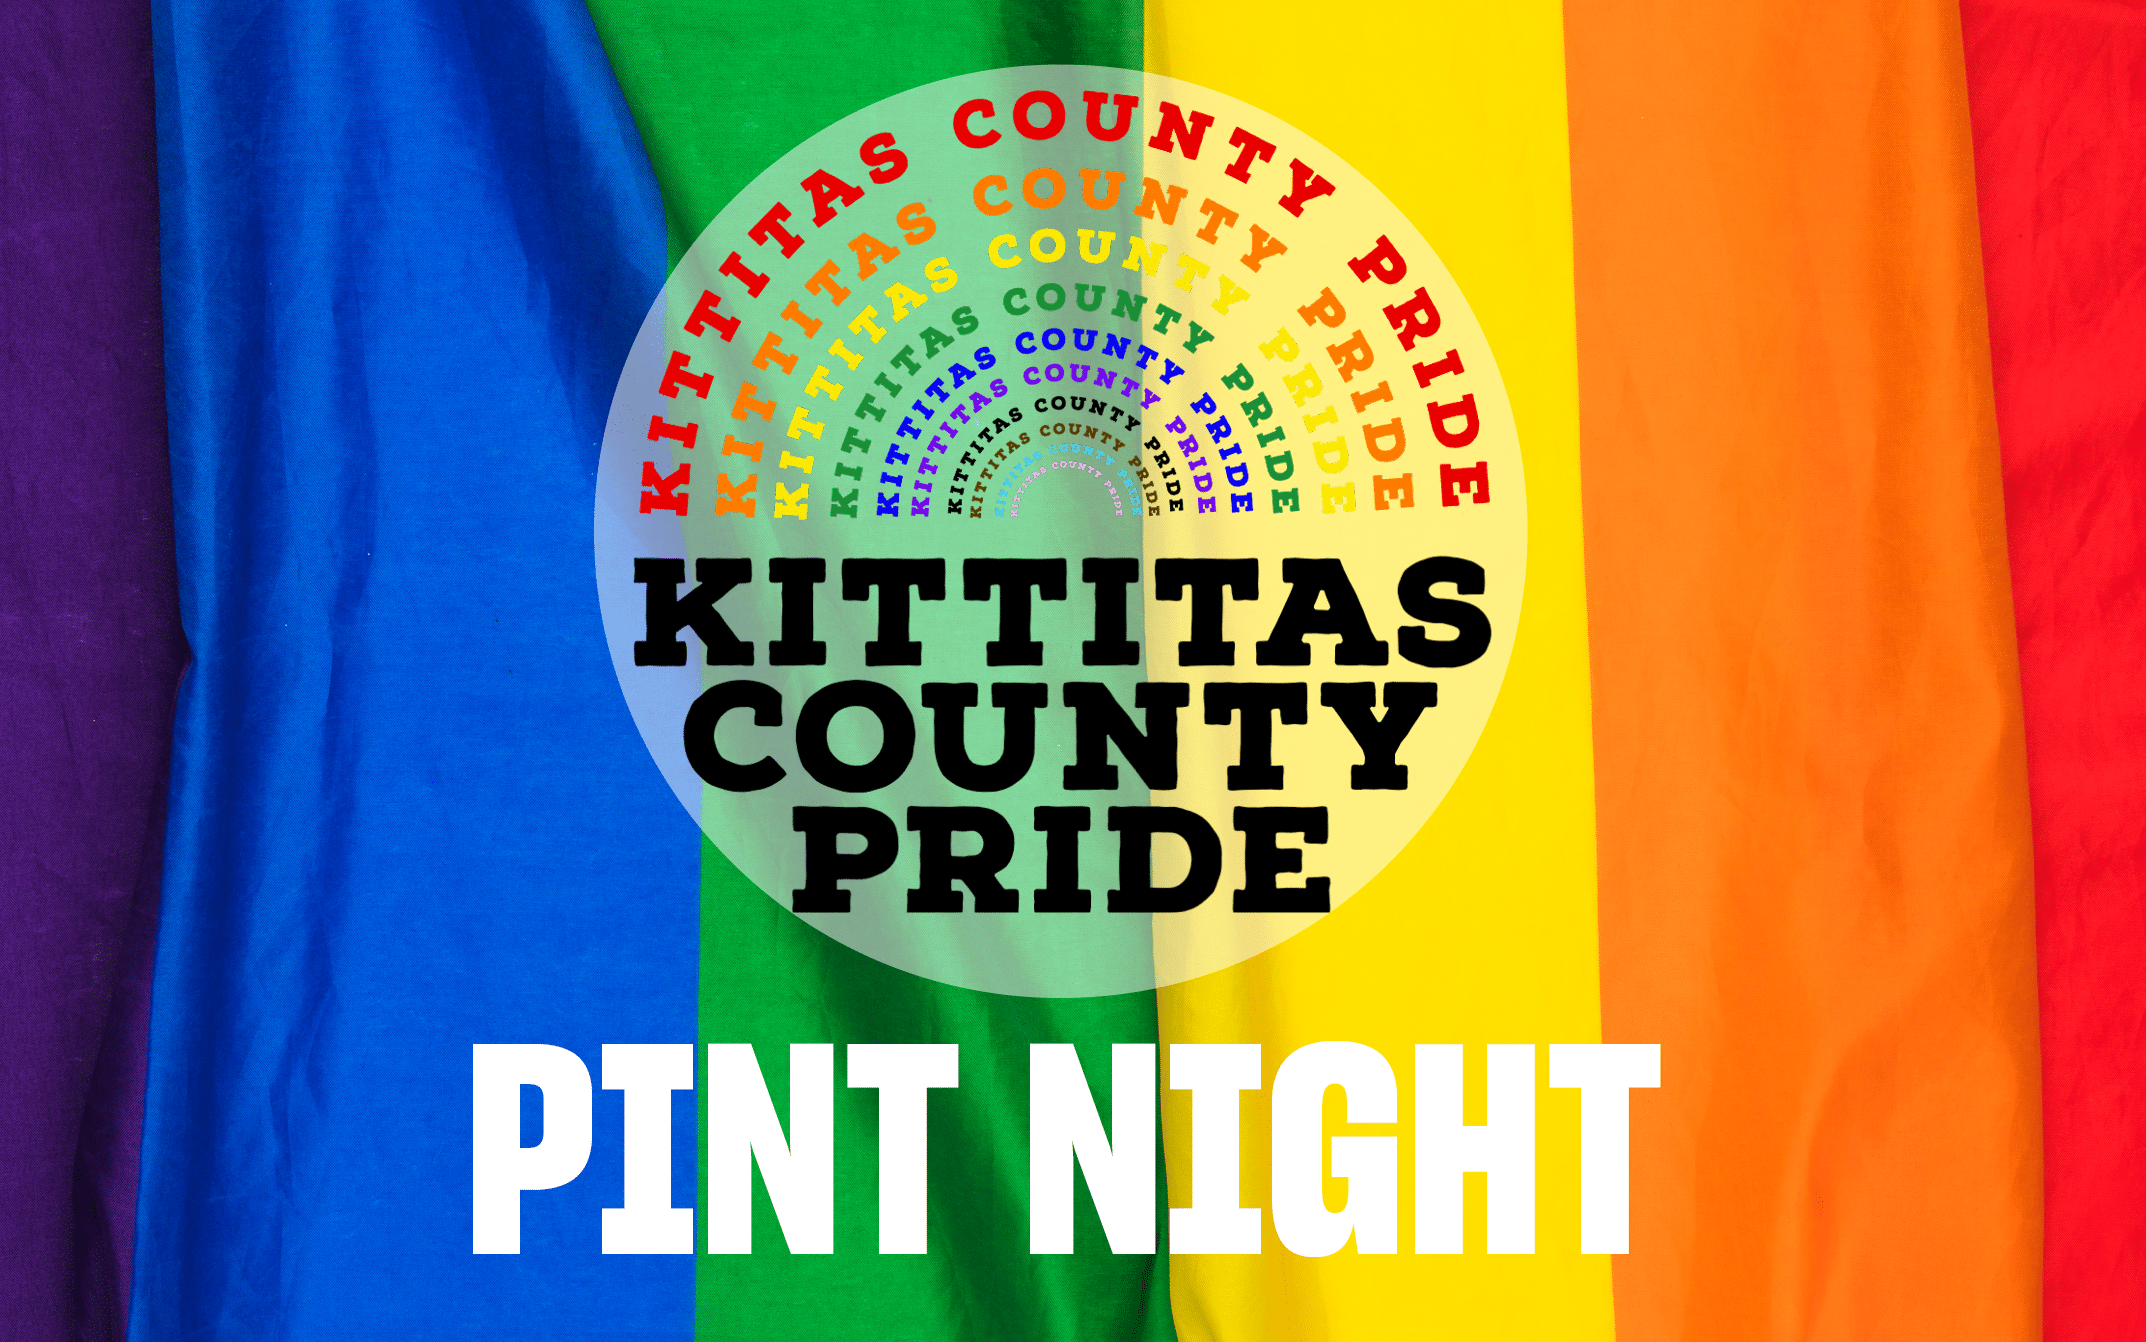 Kittitas County Pride Pint Night